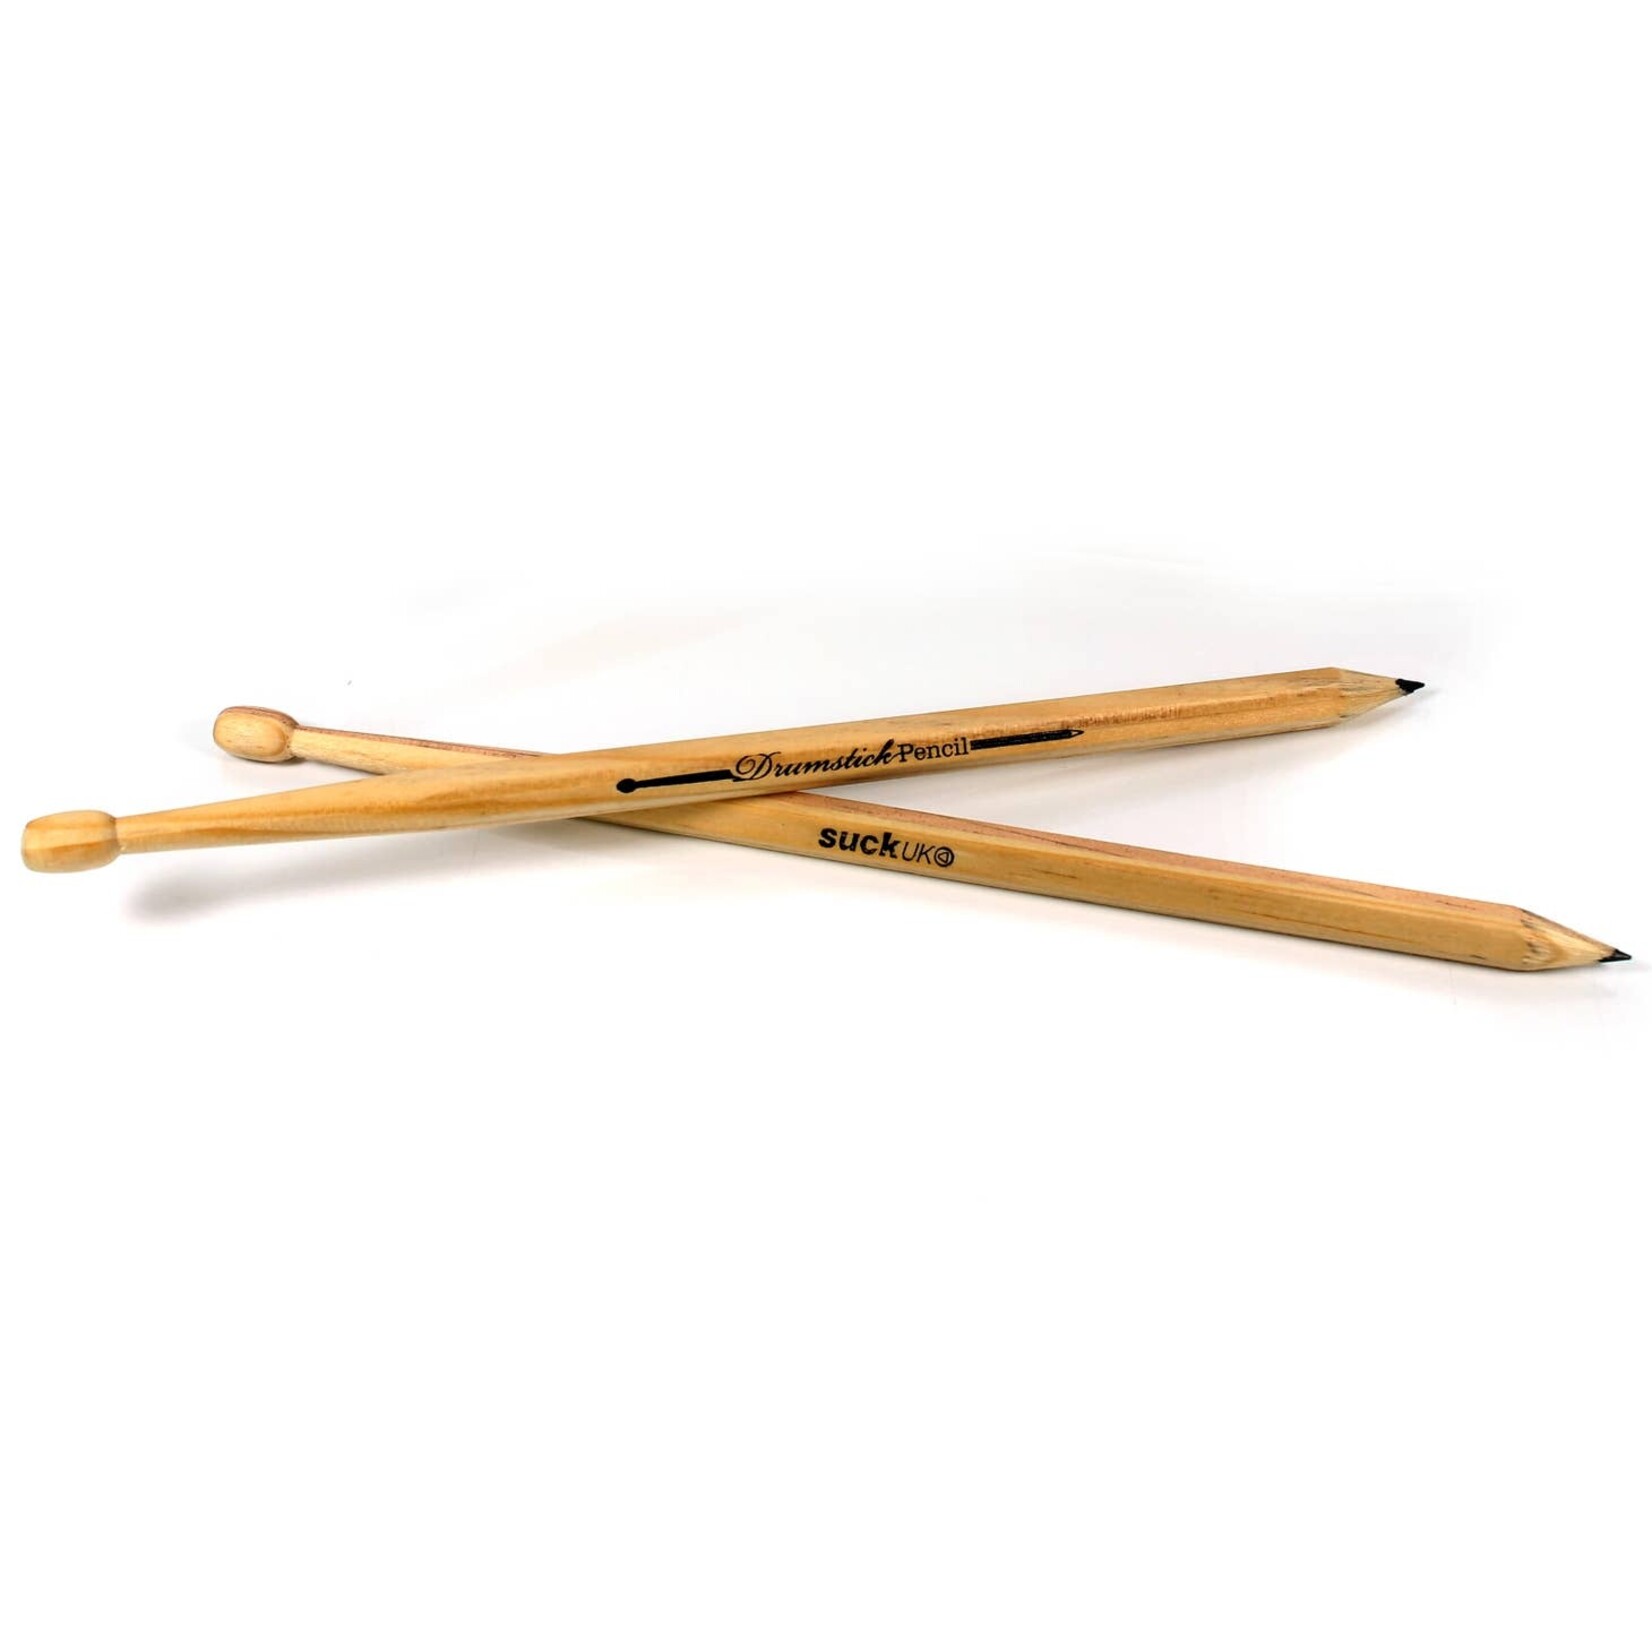 SUCK UK Ltd - USA Drumstick Pens